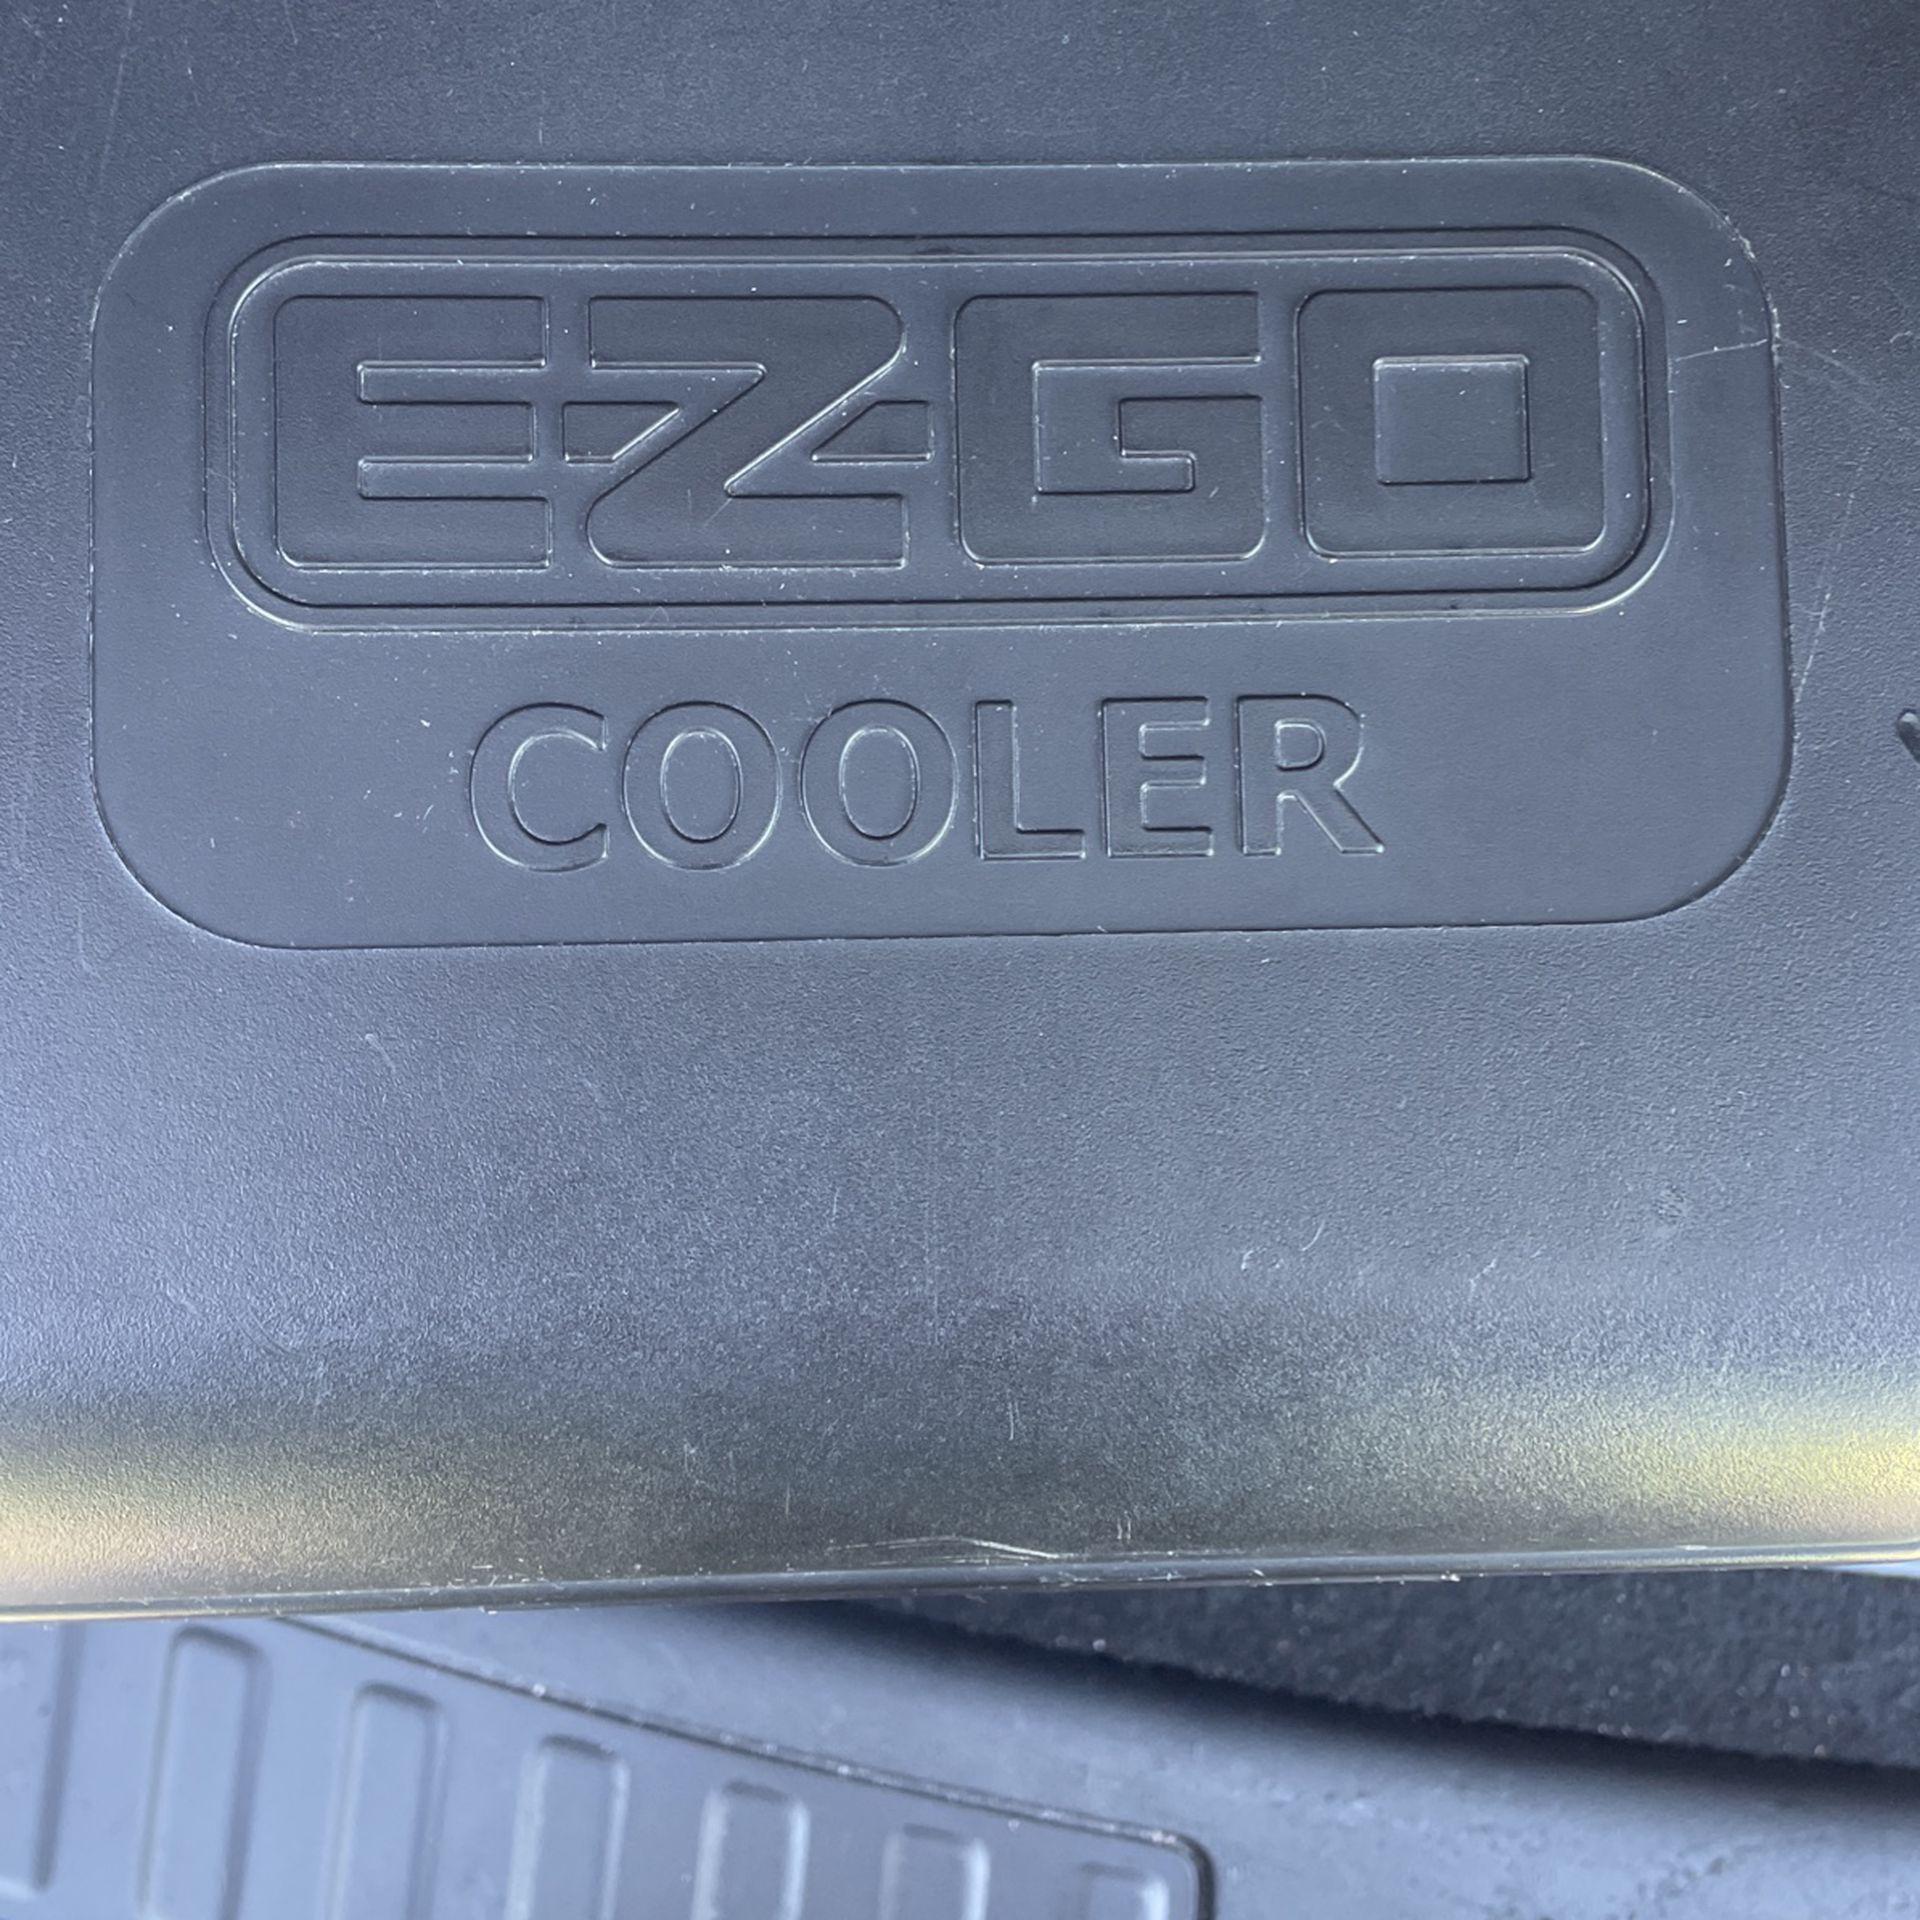 EZ Go Golf cart Beverage Cooler 